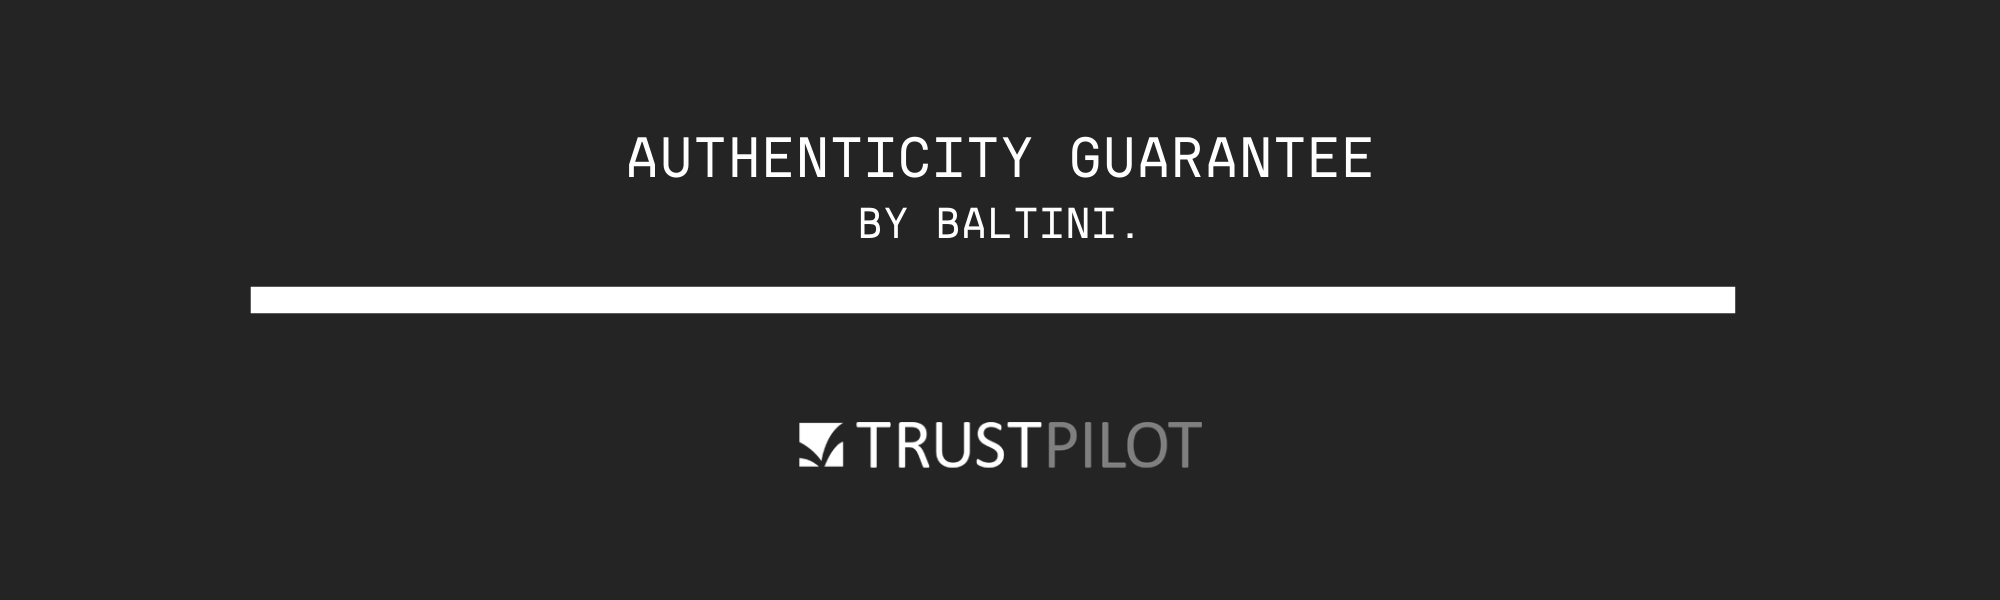 Authenticity Guarantee